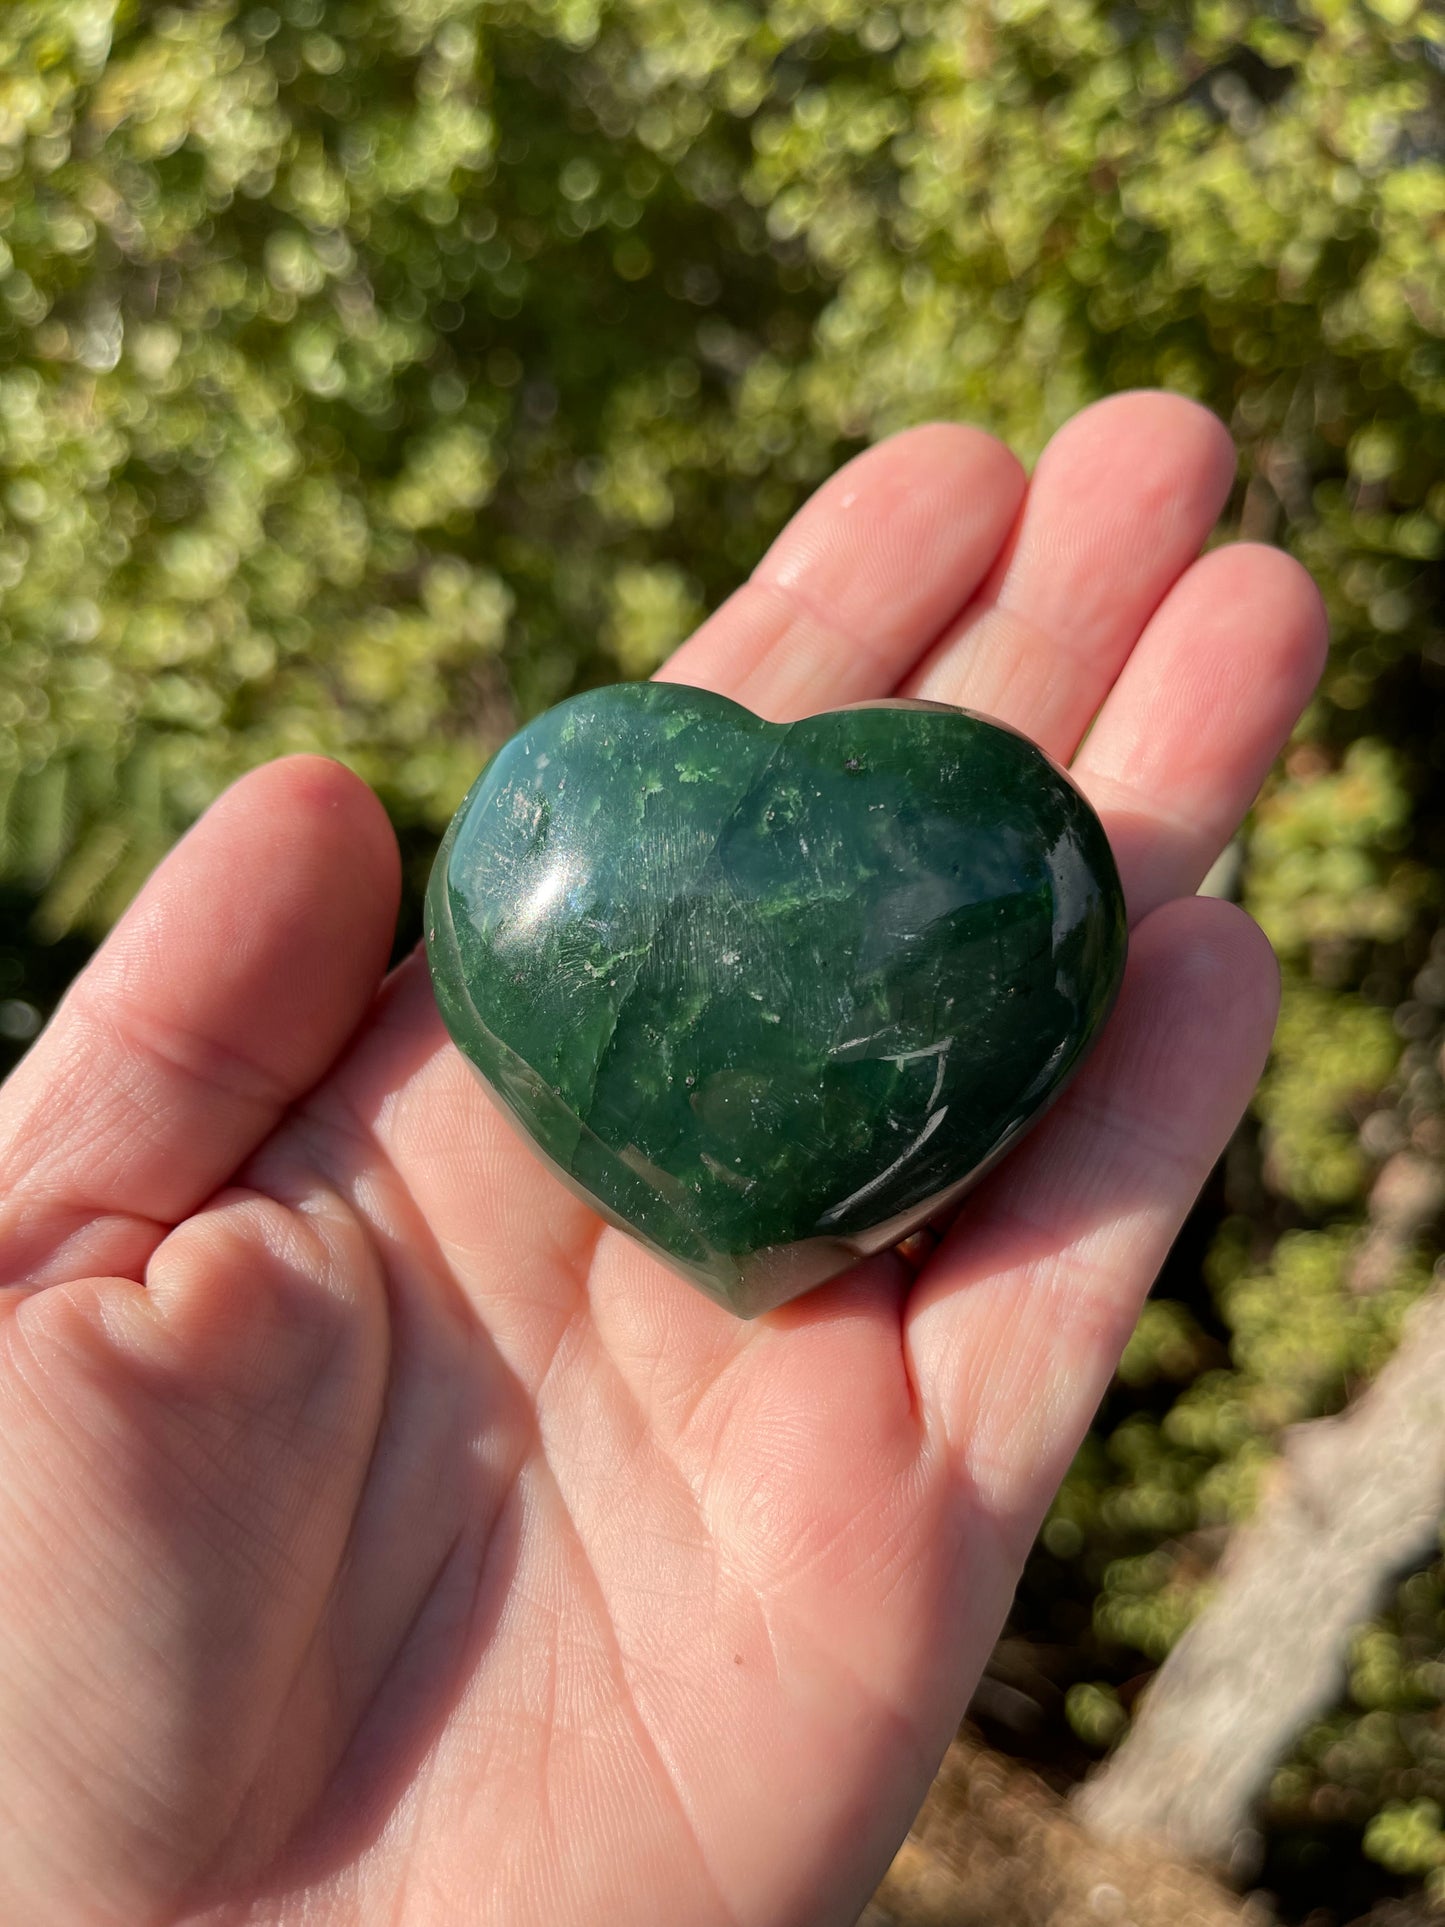 Nephrite Jade Heart